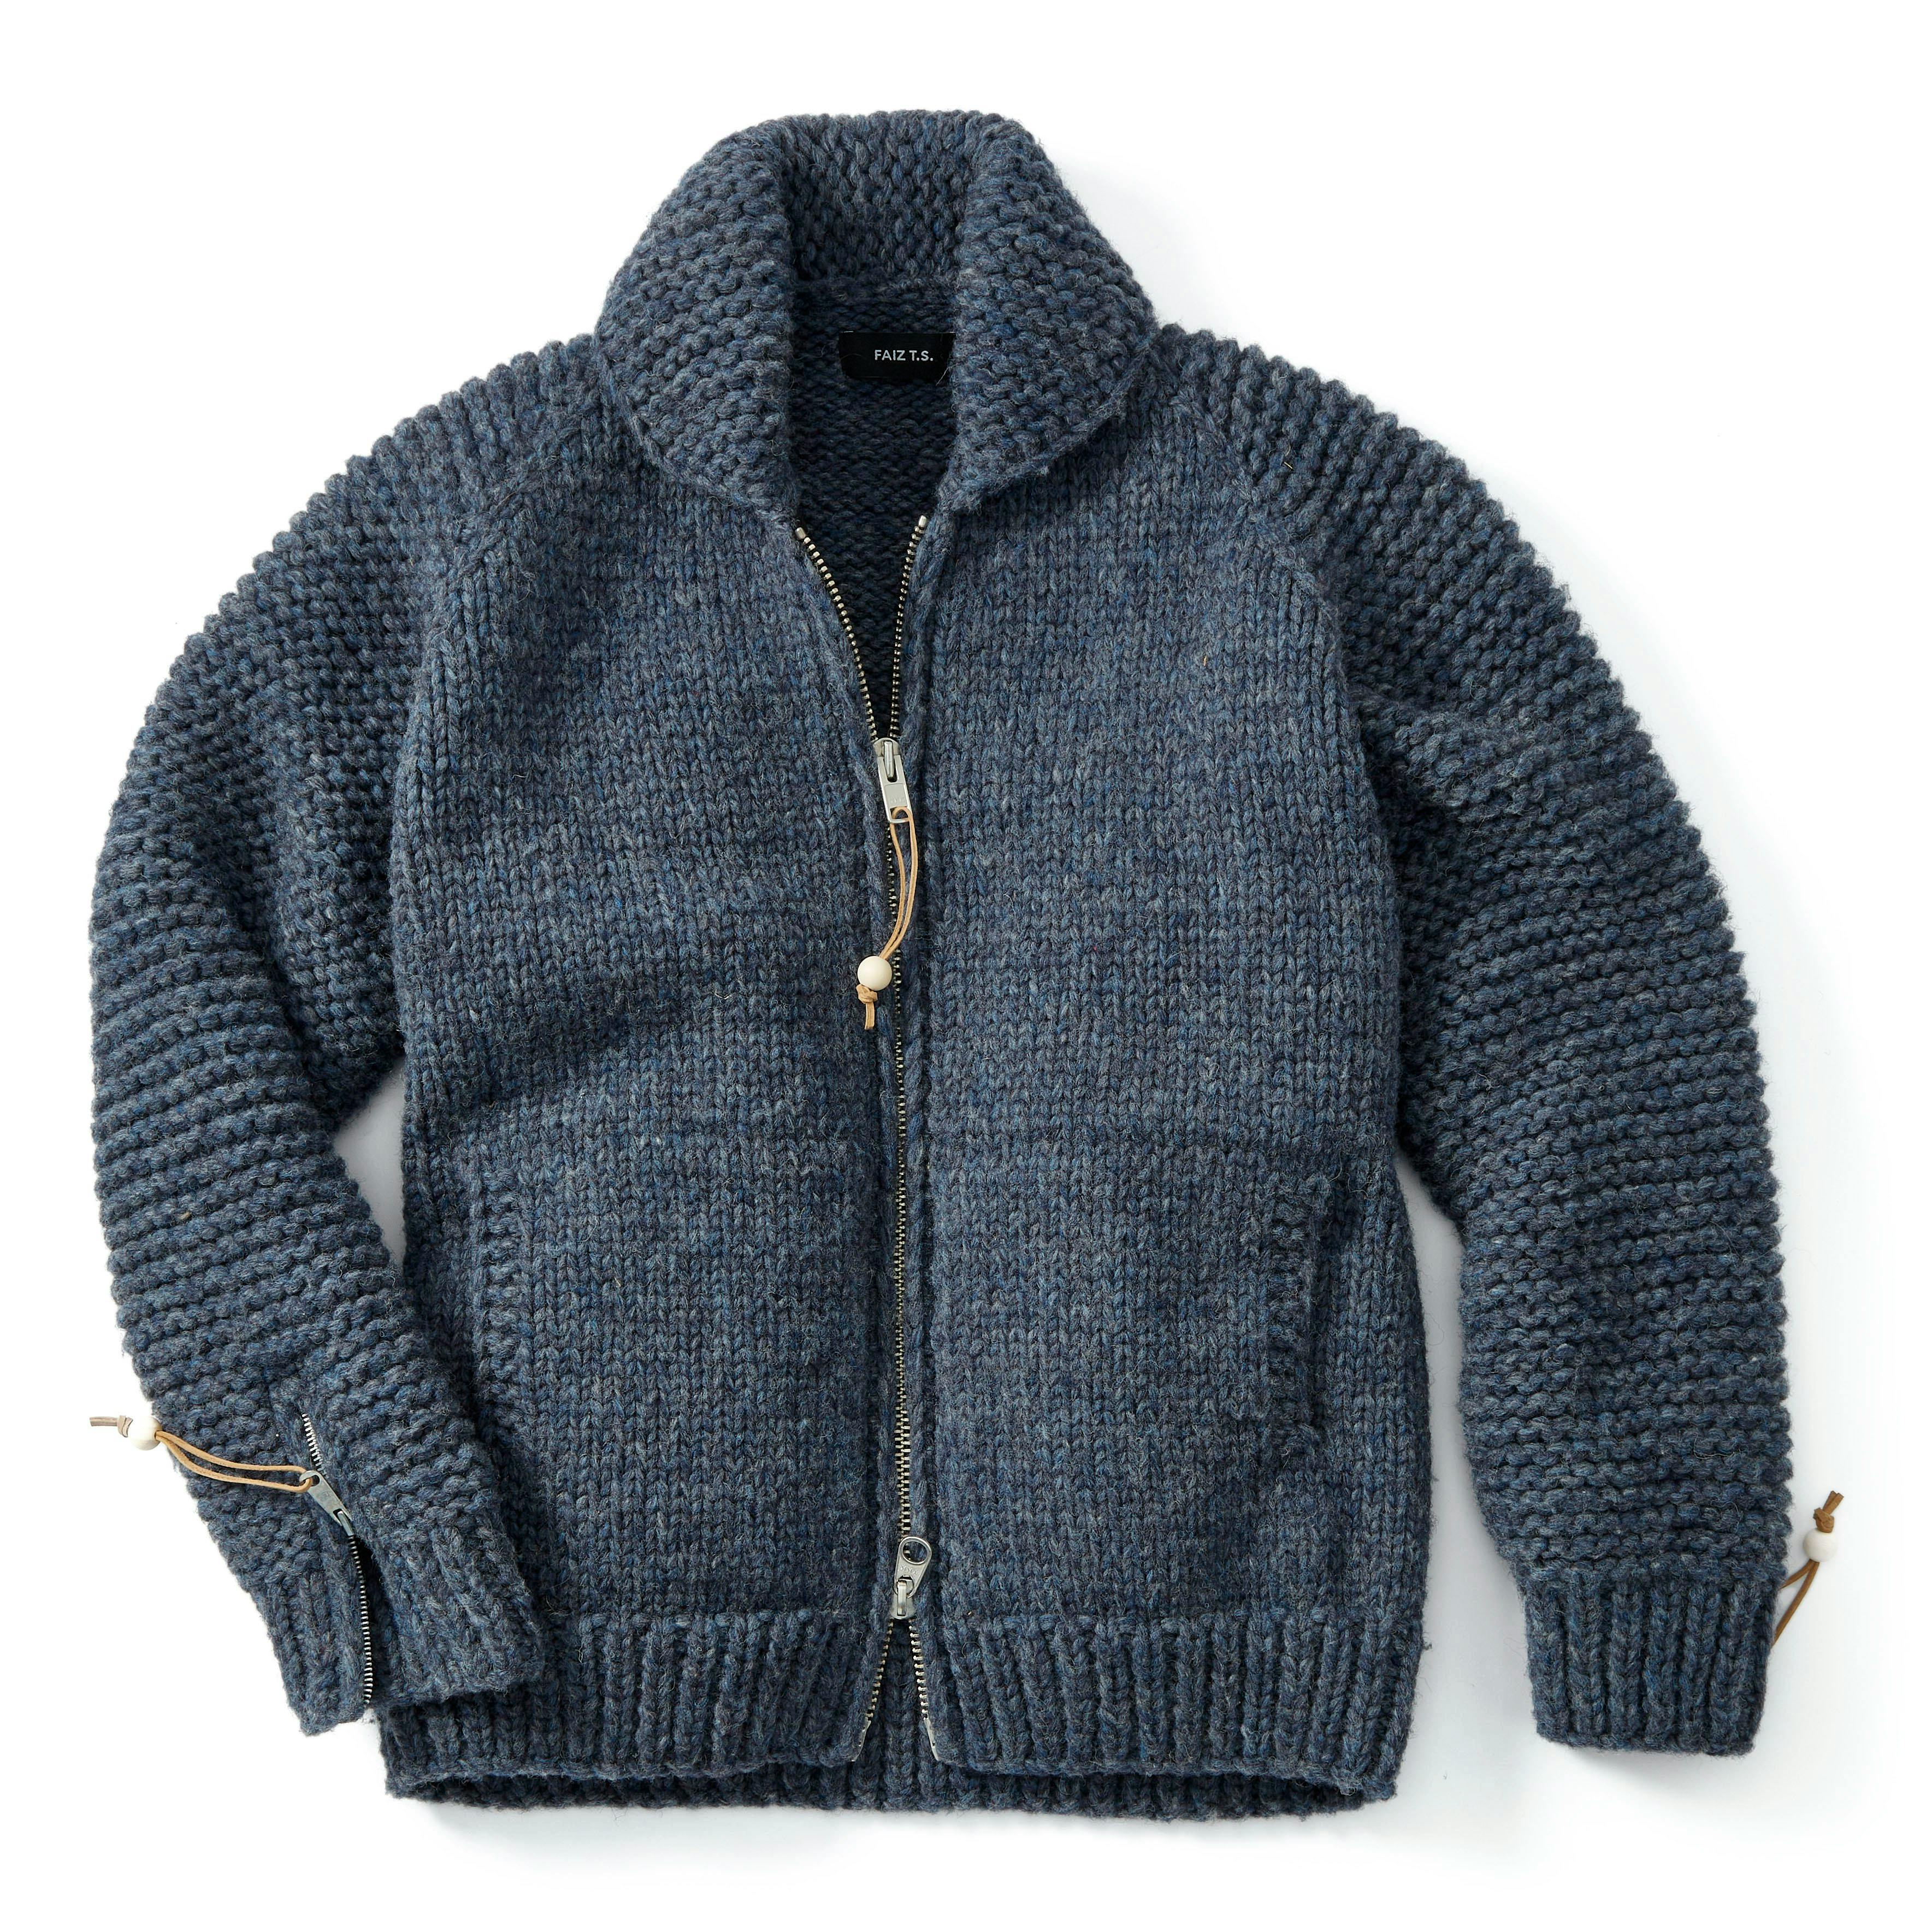 Handknit Heavyweight Moto Knit Wool Cardigan Sweater